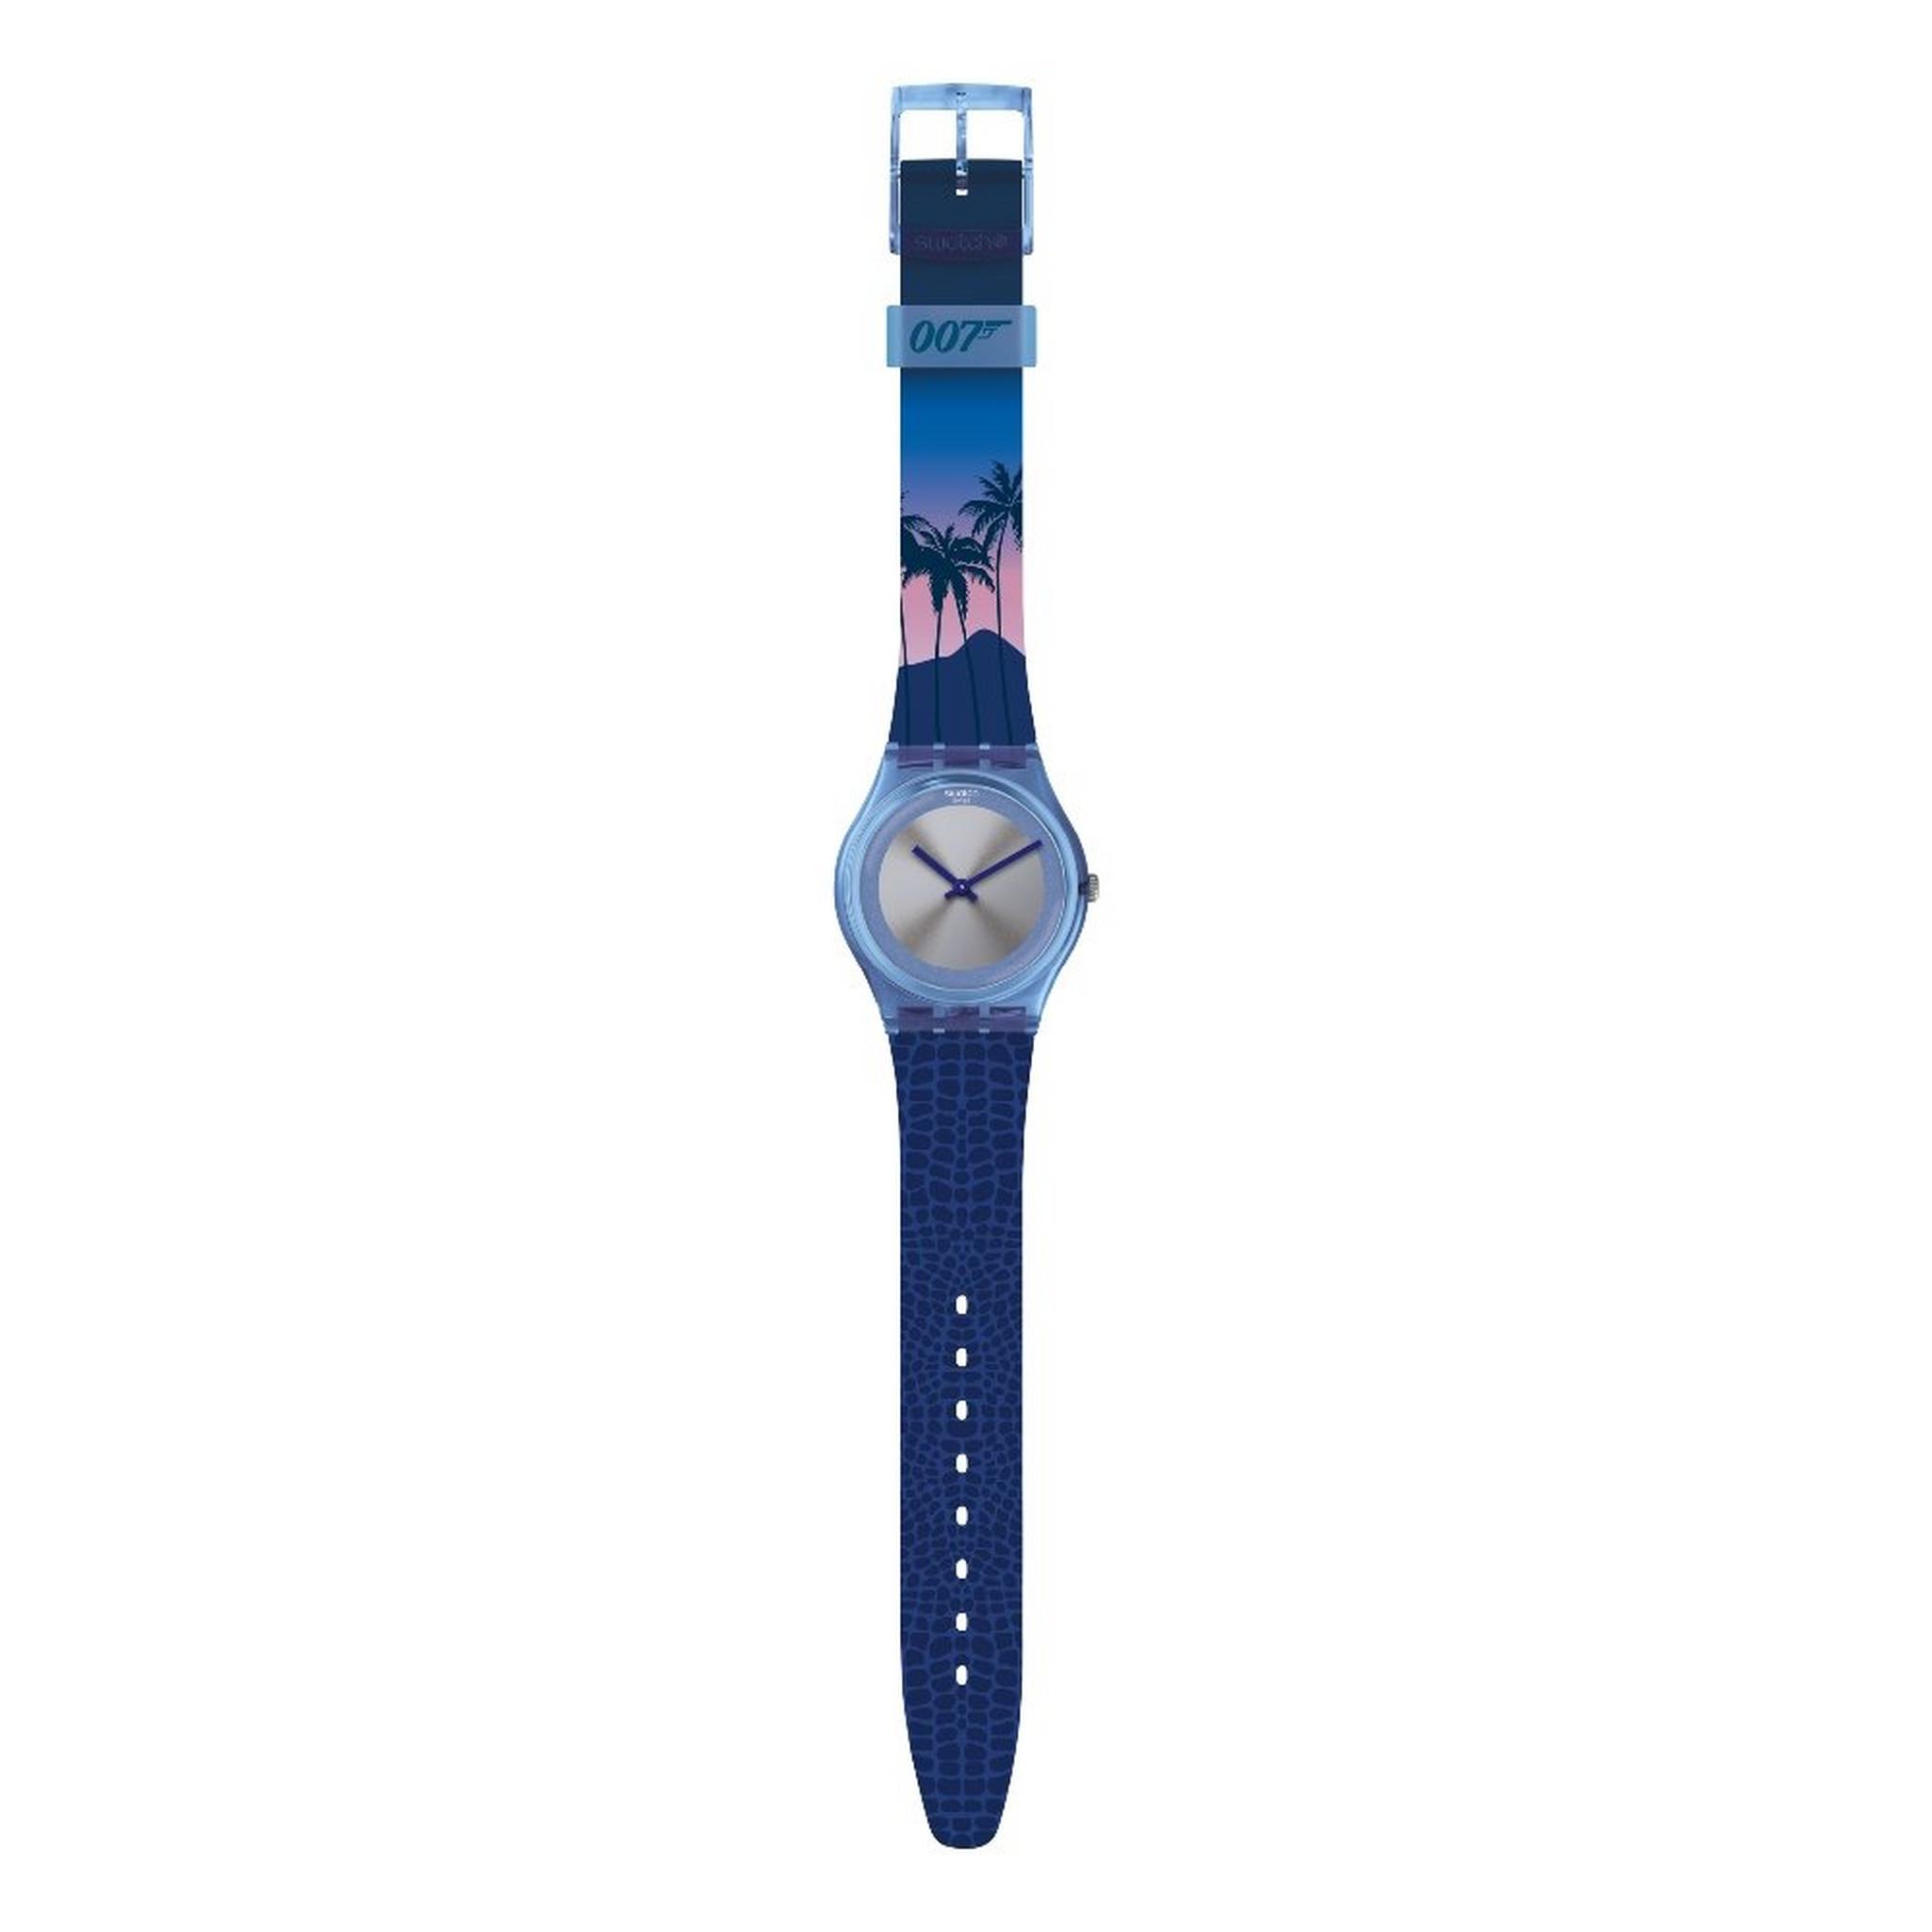 Swatch 1989 (007) Edition 34mm Unisex Watch (SWAGZ328)